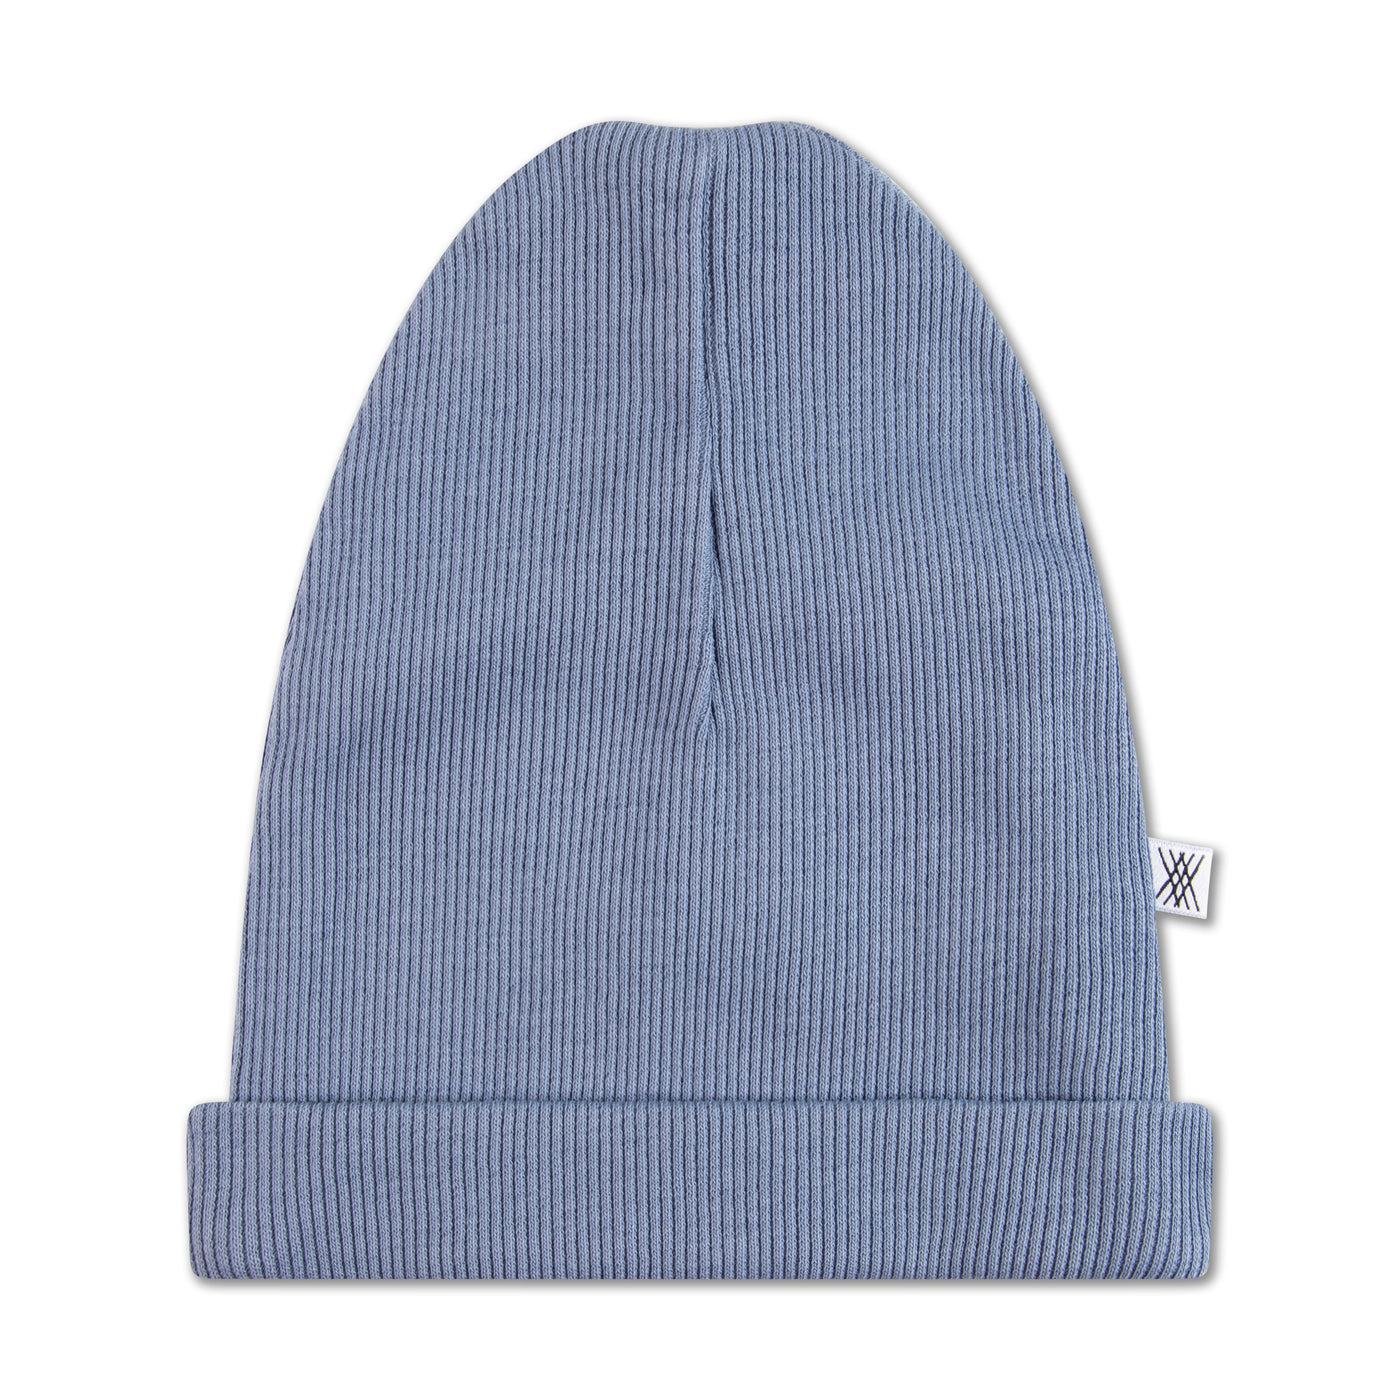 hat - dusk blue